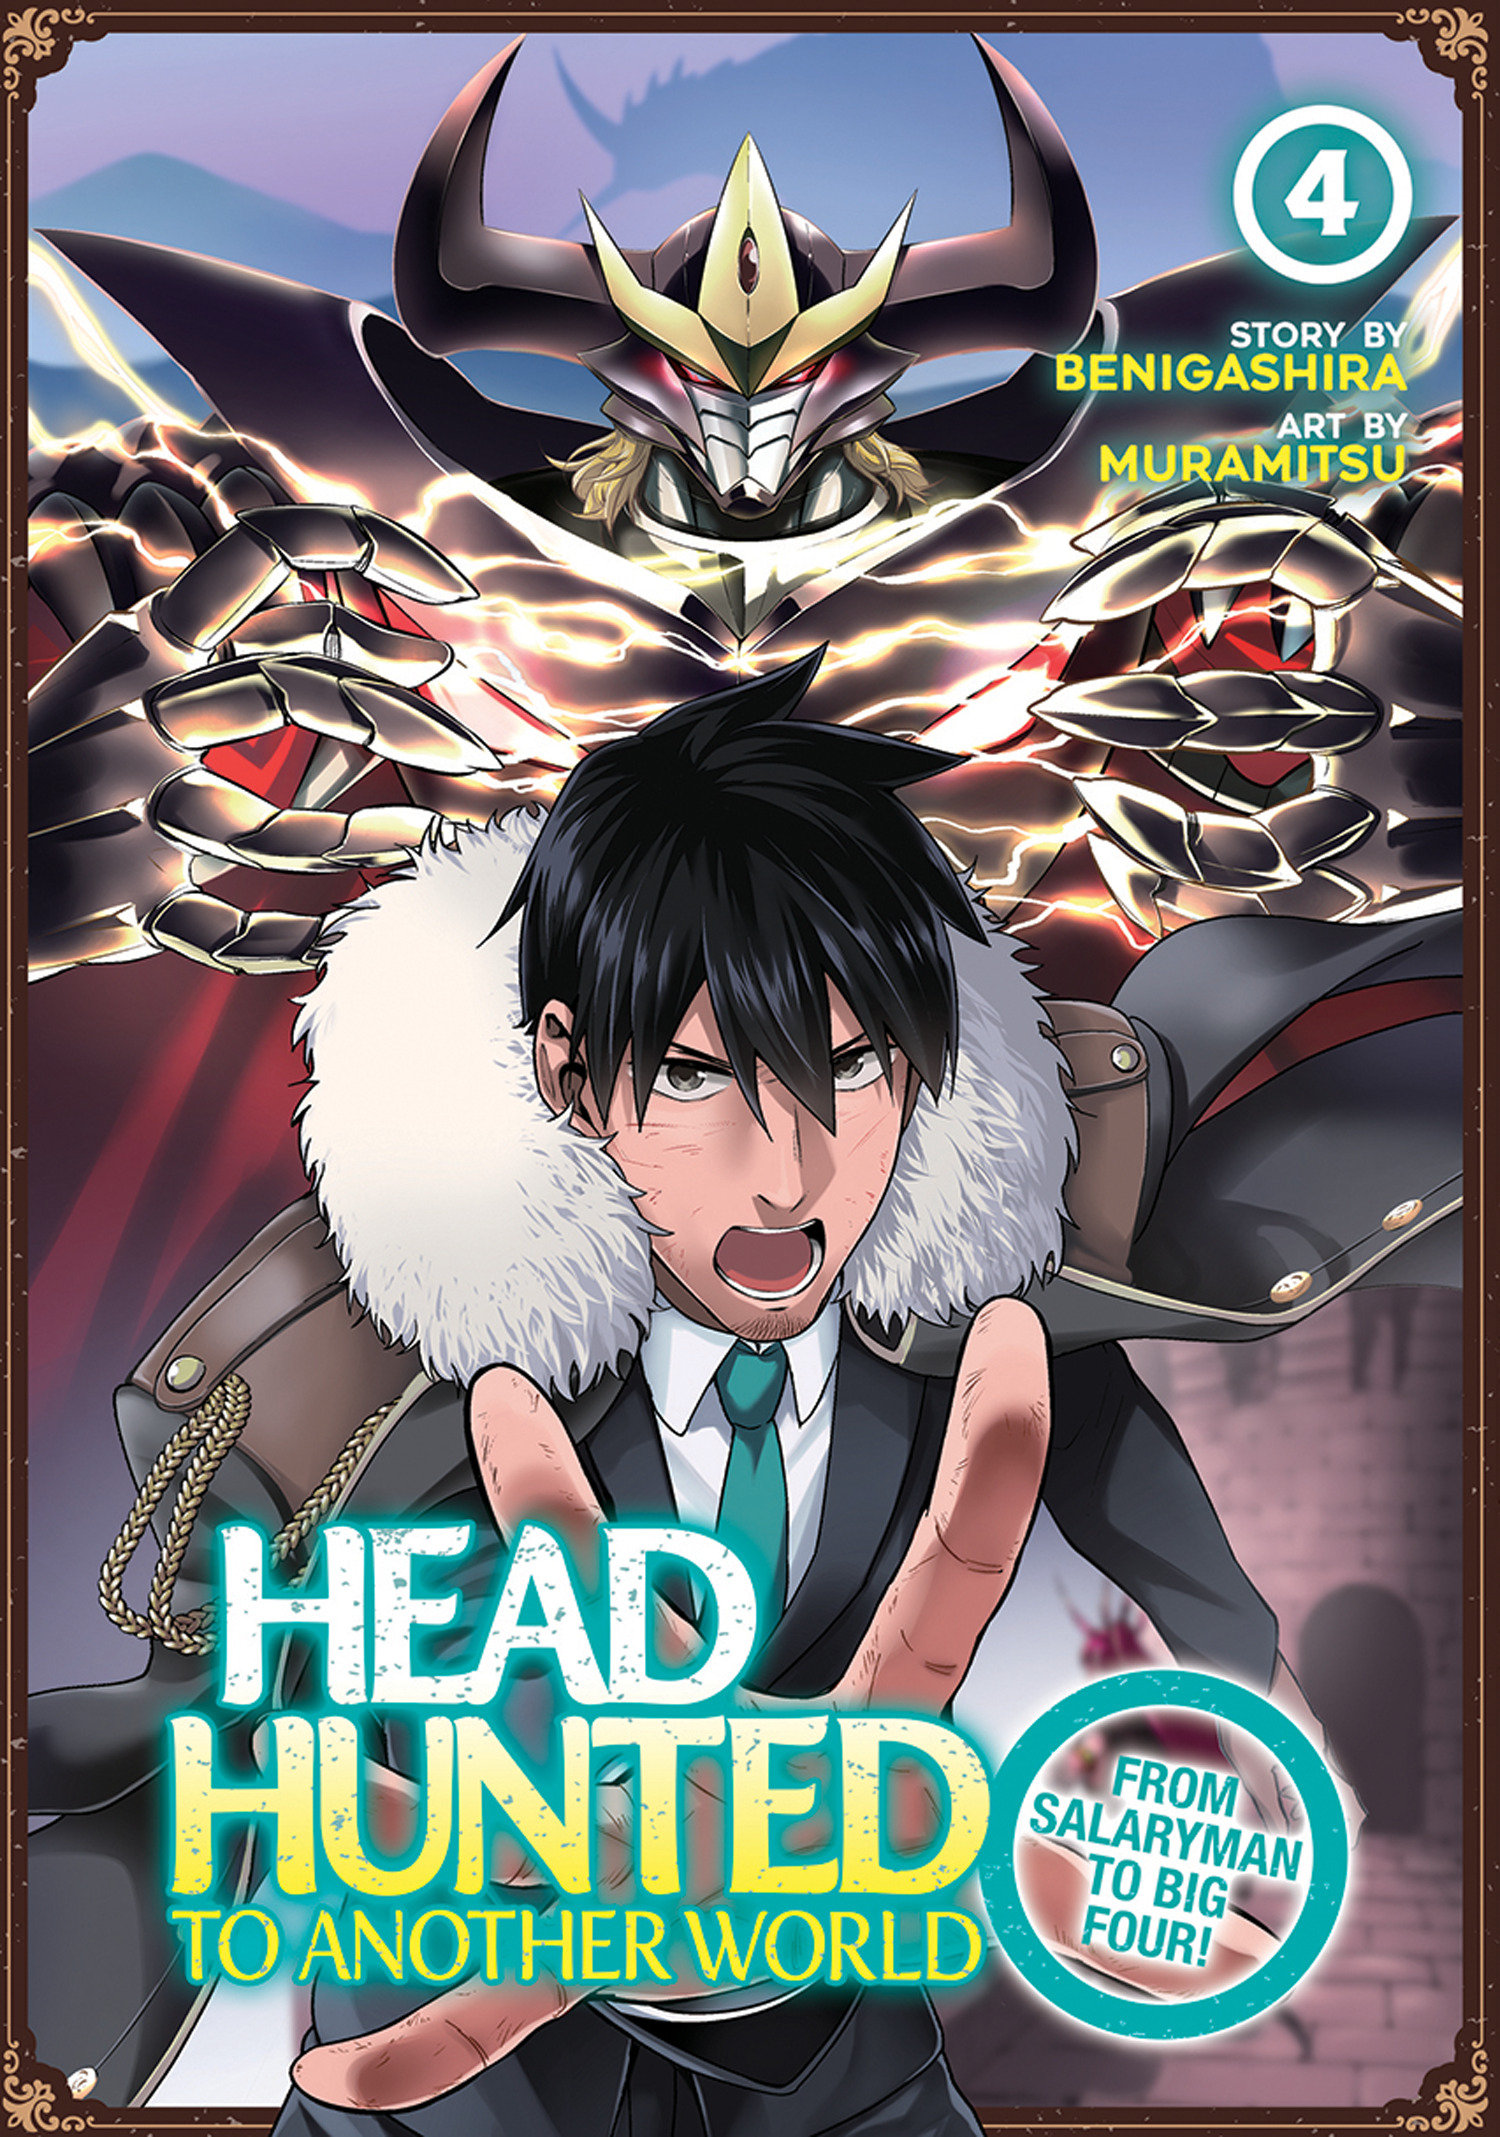 Headhunted to Another World: From Salaryman to Big Four Manga Volume 4